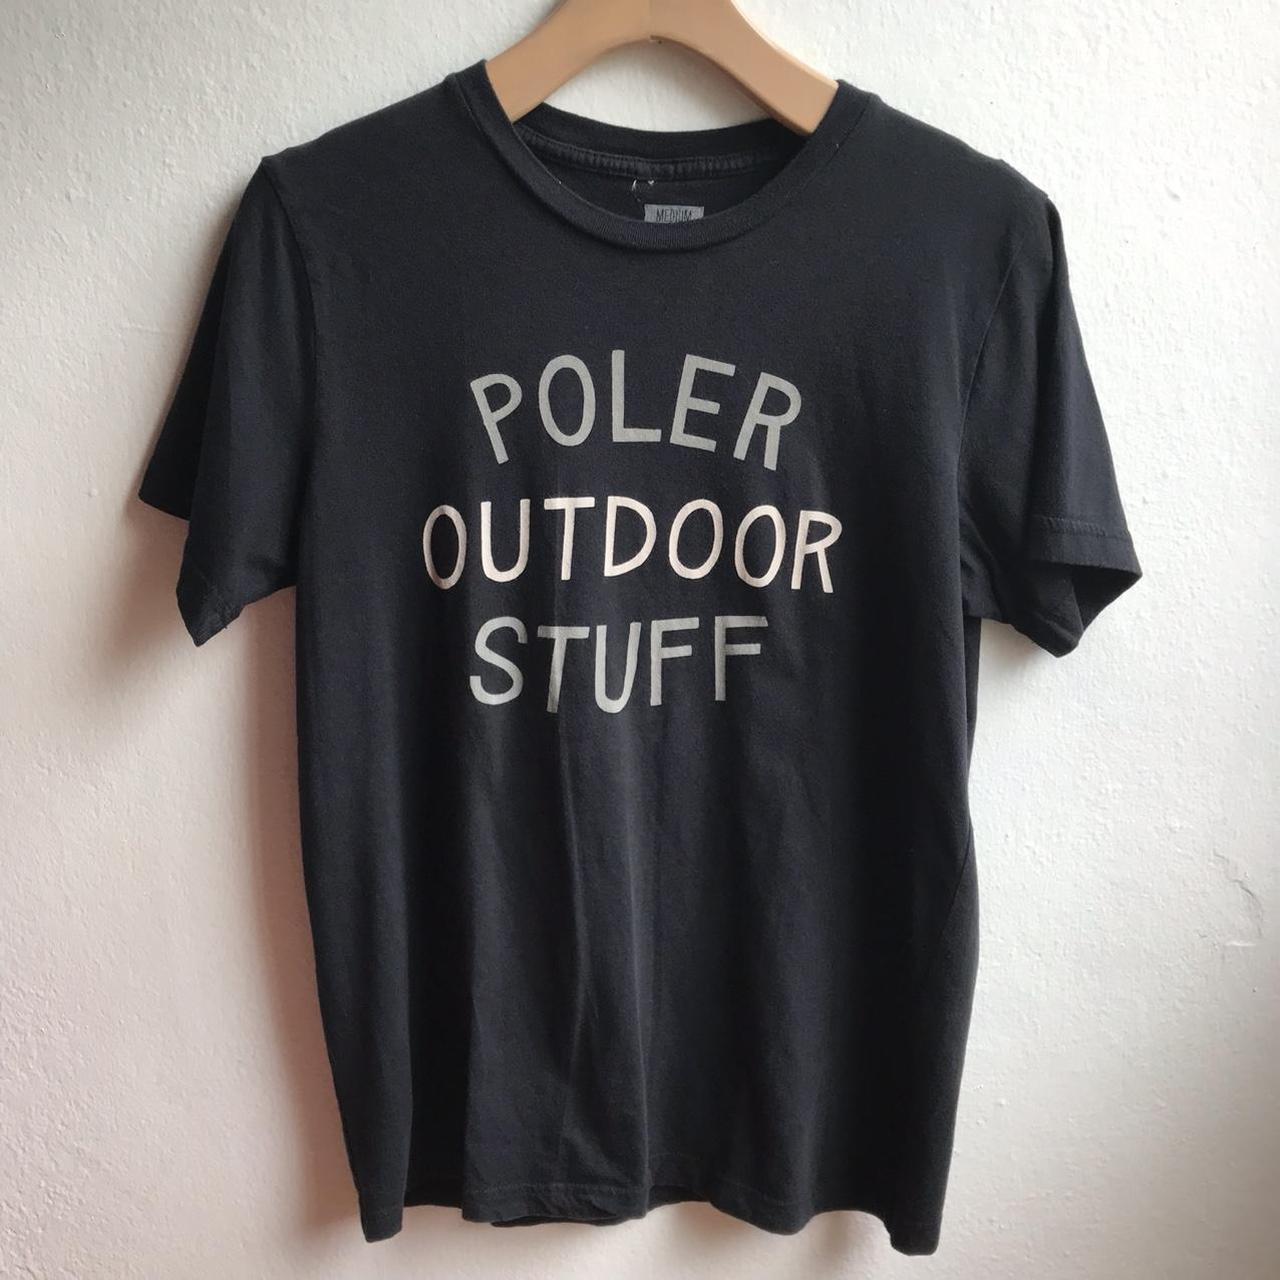 Product Image 1 - Poler Outdoor Stuff t-shirt
Size: Medium
Condition: